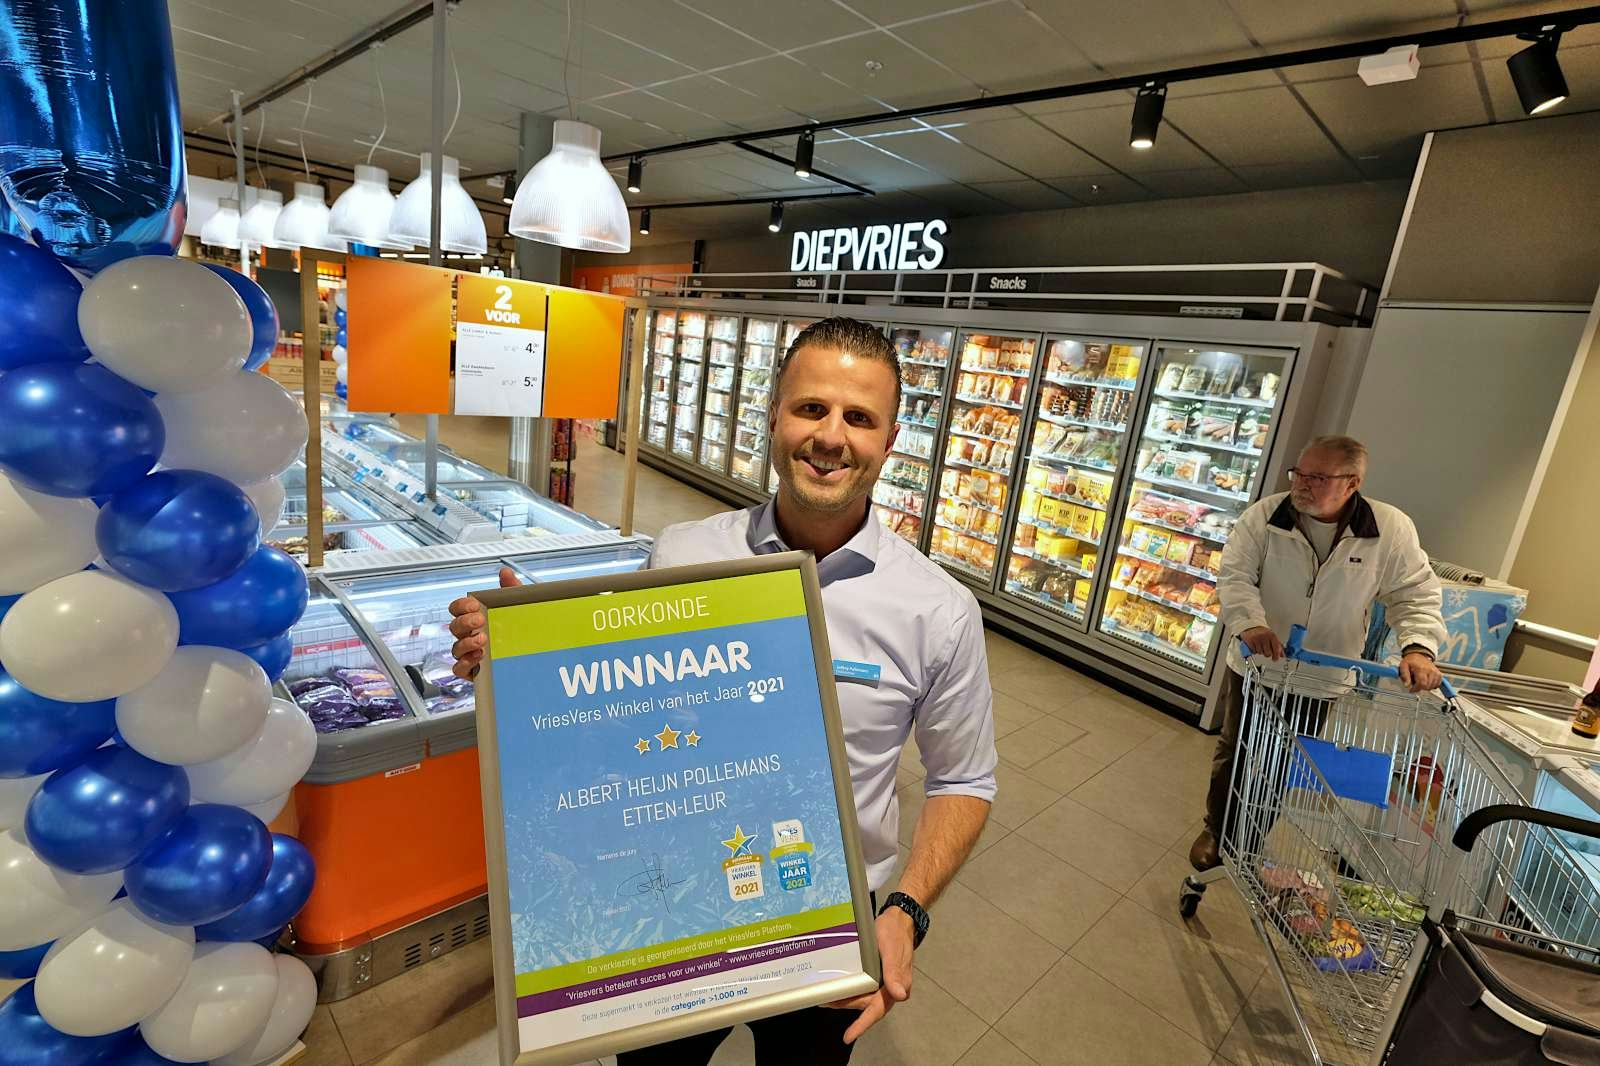 AH Pollemans won de VriesVers winkelwedstrijd wedstrijd ook al in 2021. Foto: Distrifood